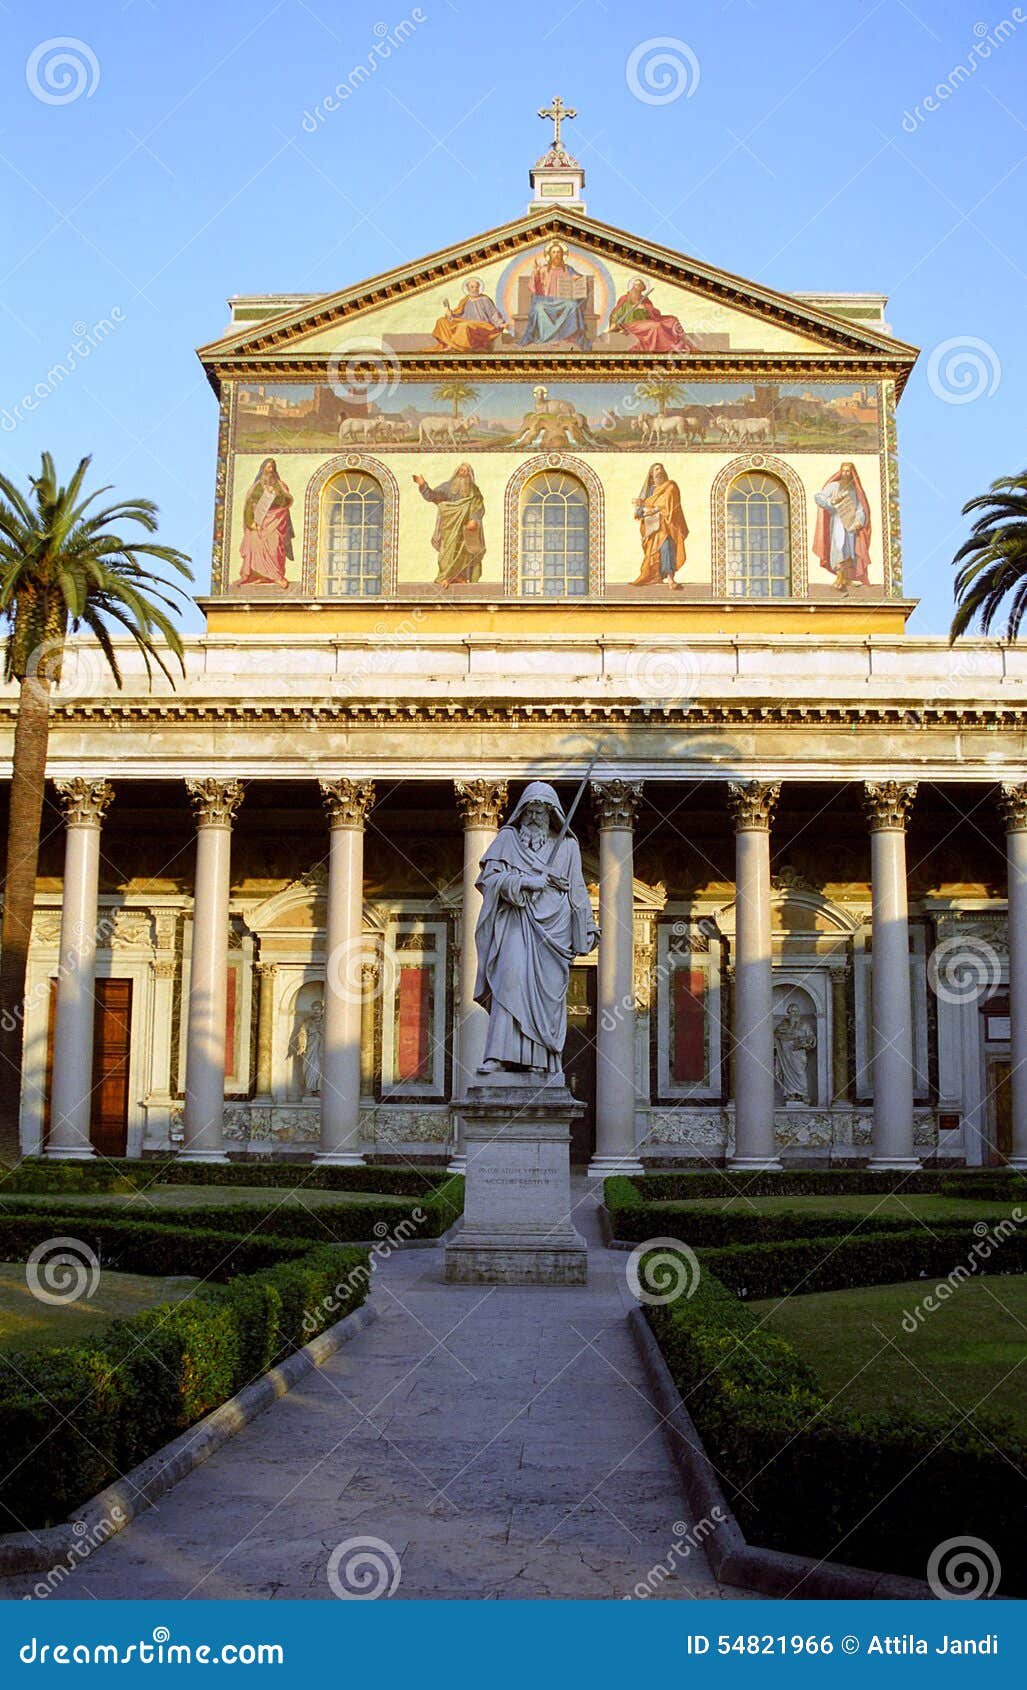 st. paul's basilica, rome, italy